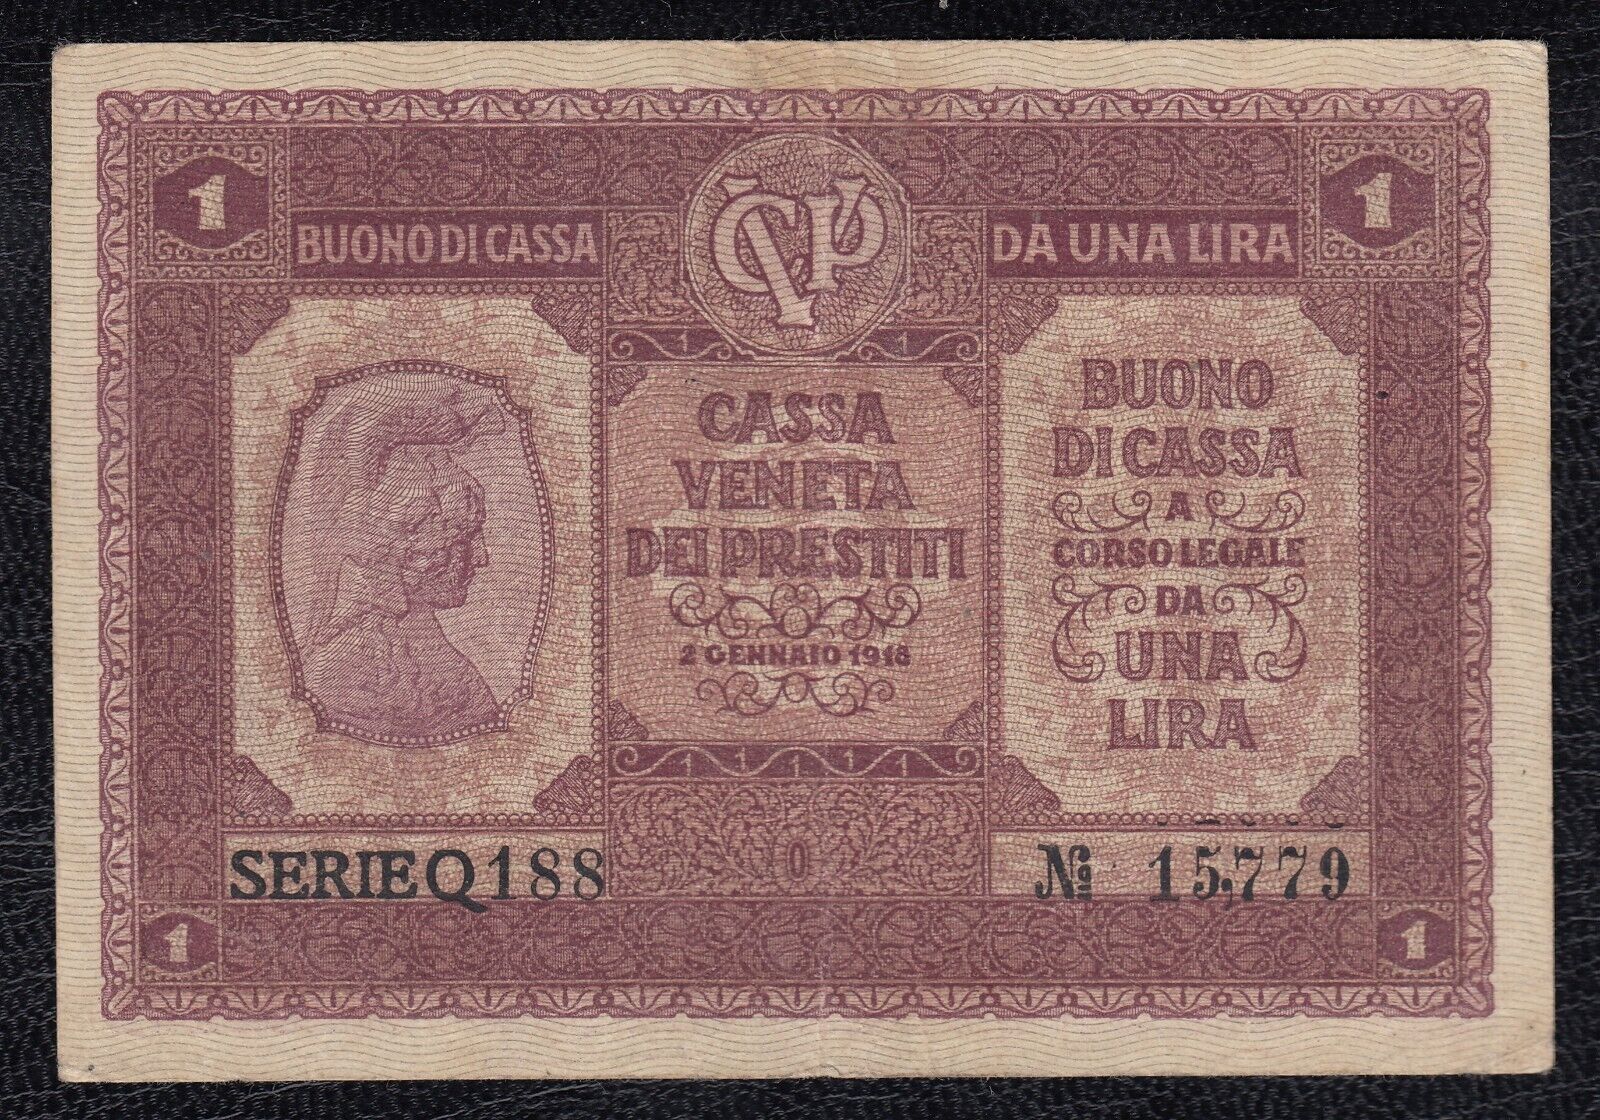 1918 Kingdom Italy Austria 1 Lira Banknote Paper Money Bill Vintage Currency